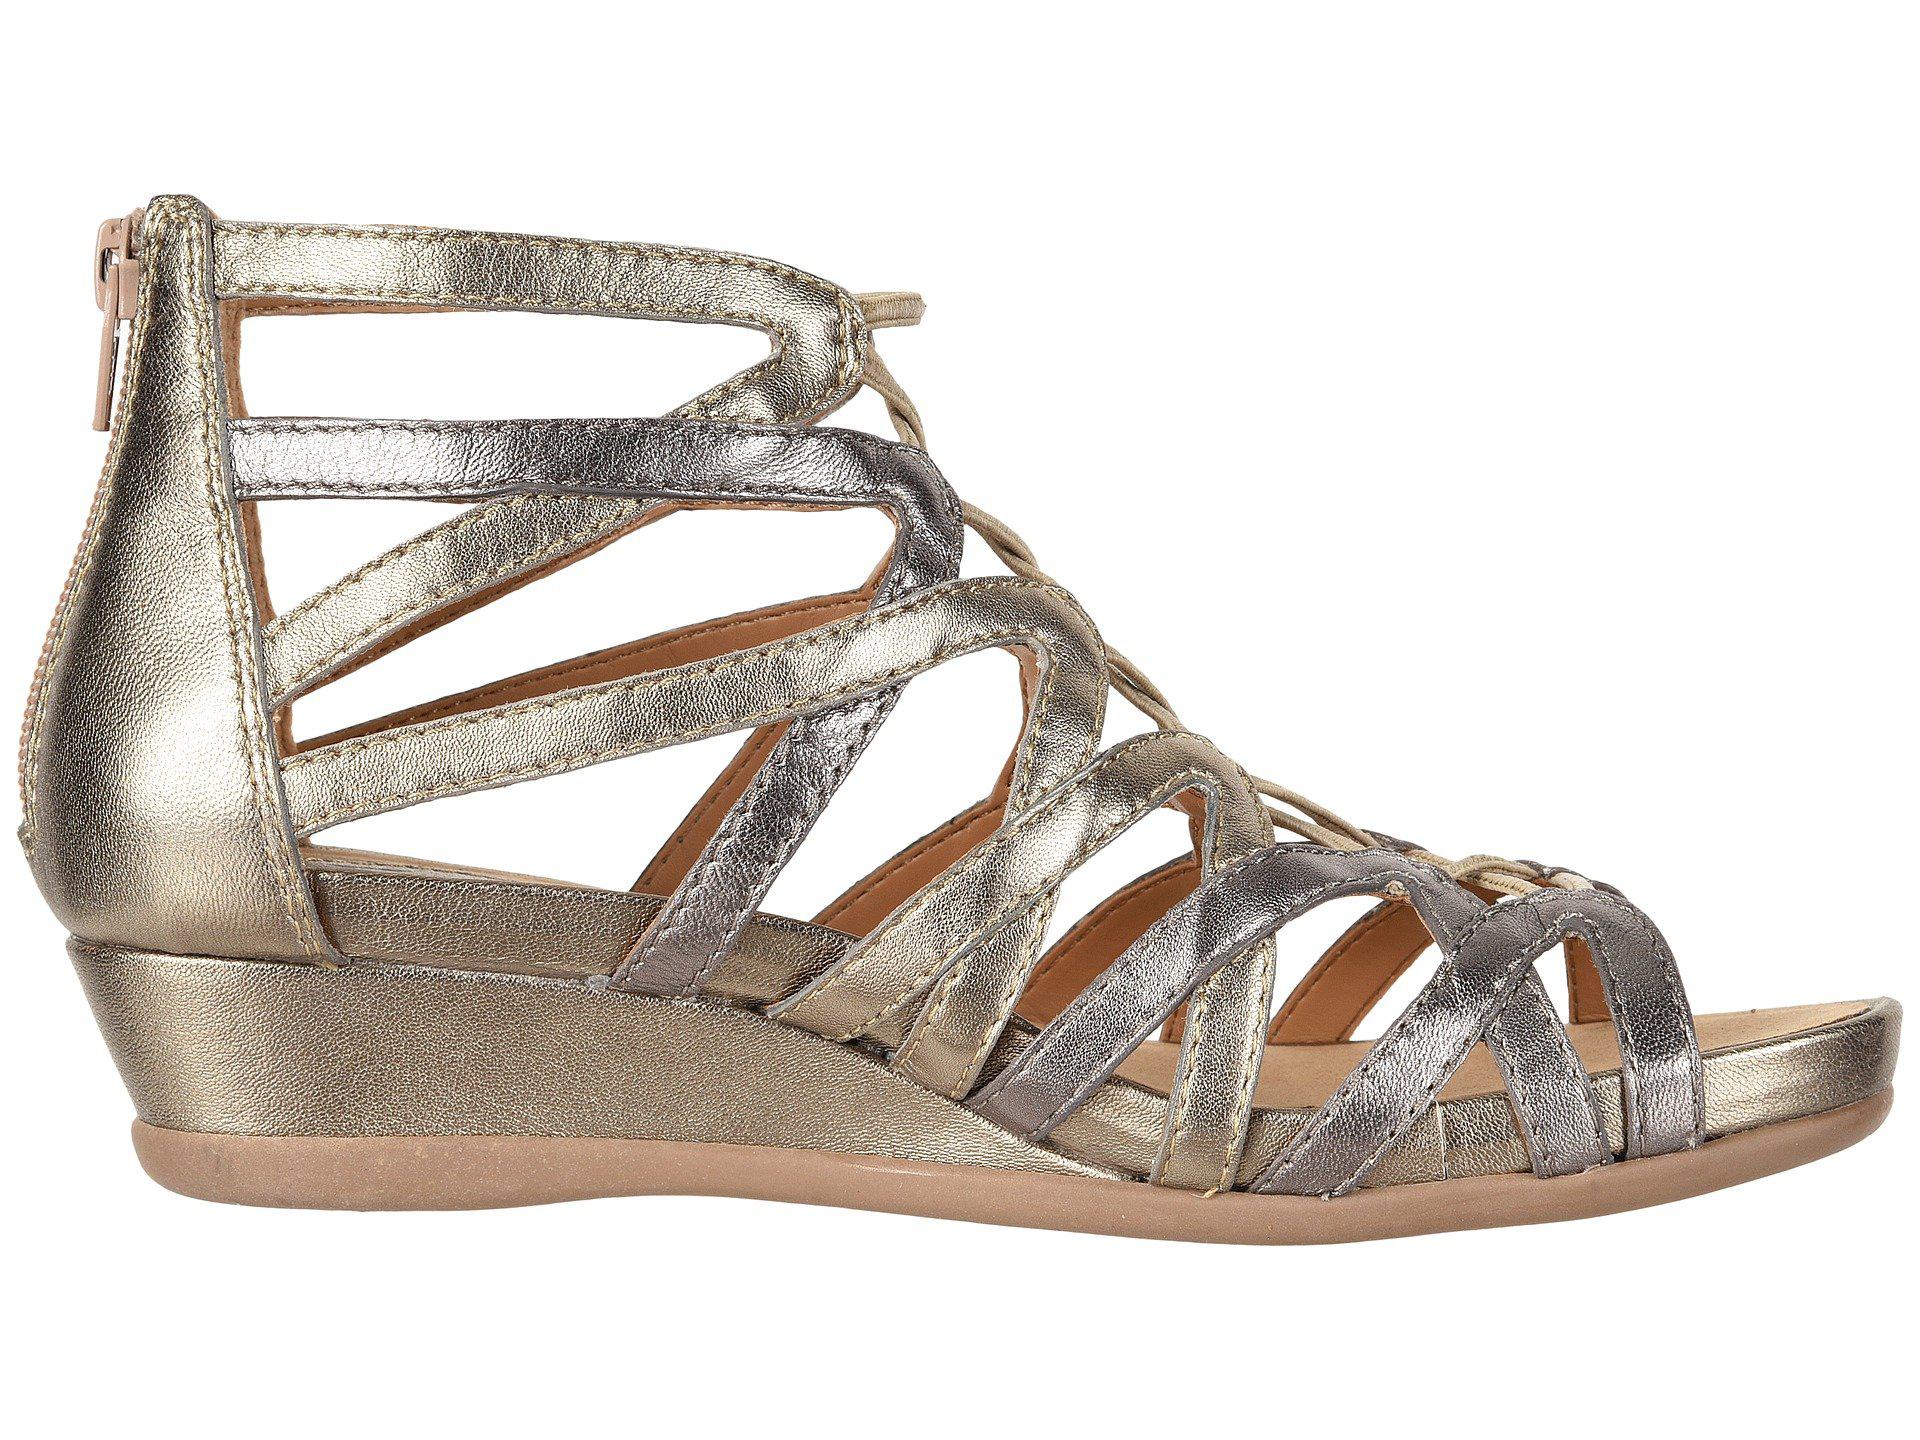 Lyst - Earth Juno (gunmetal Metallic Tumbled Leather) Women's Shoes in ...